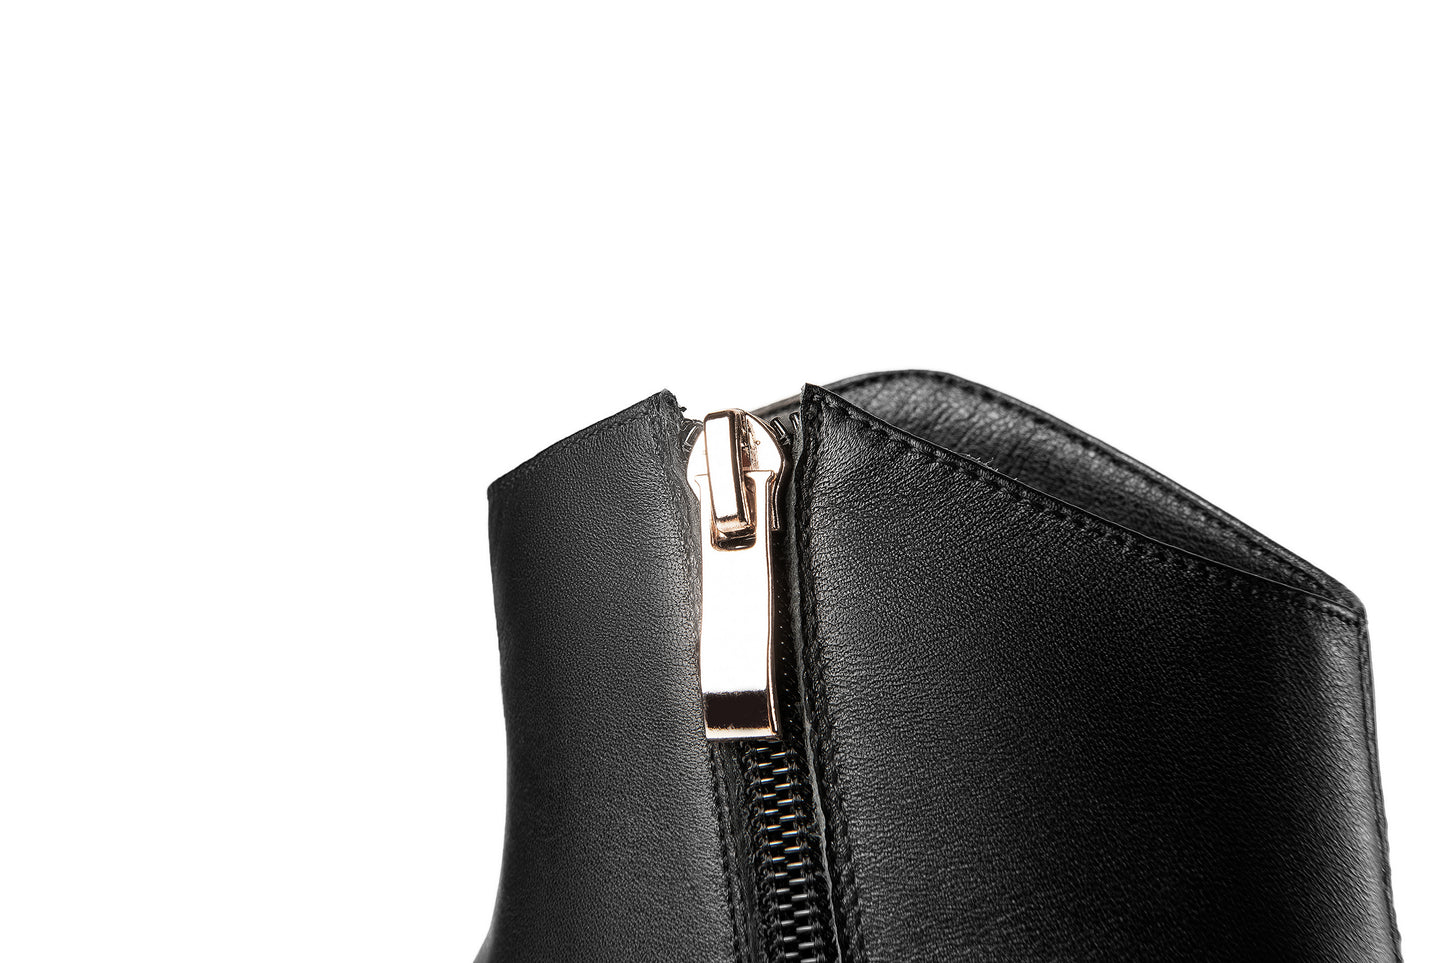 TinaCus Genuine Leather Handmade Women's Side Zip Up Metal Heel Pointed Toe Beautiful Flower Decor Ankle Booties